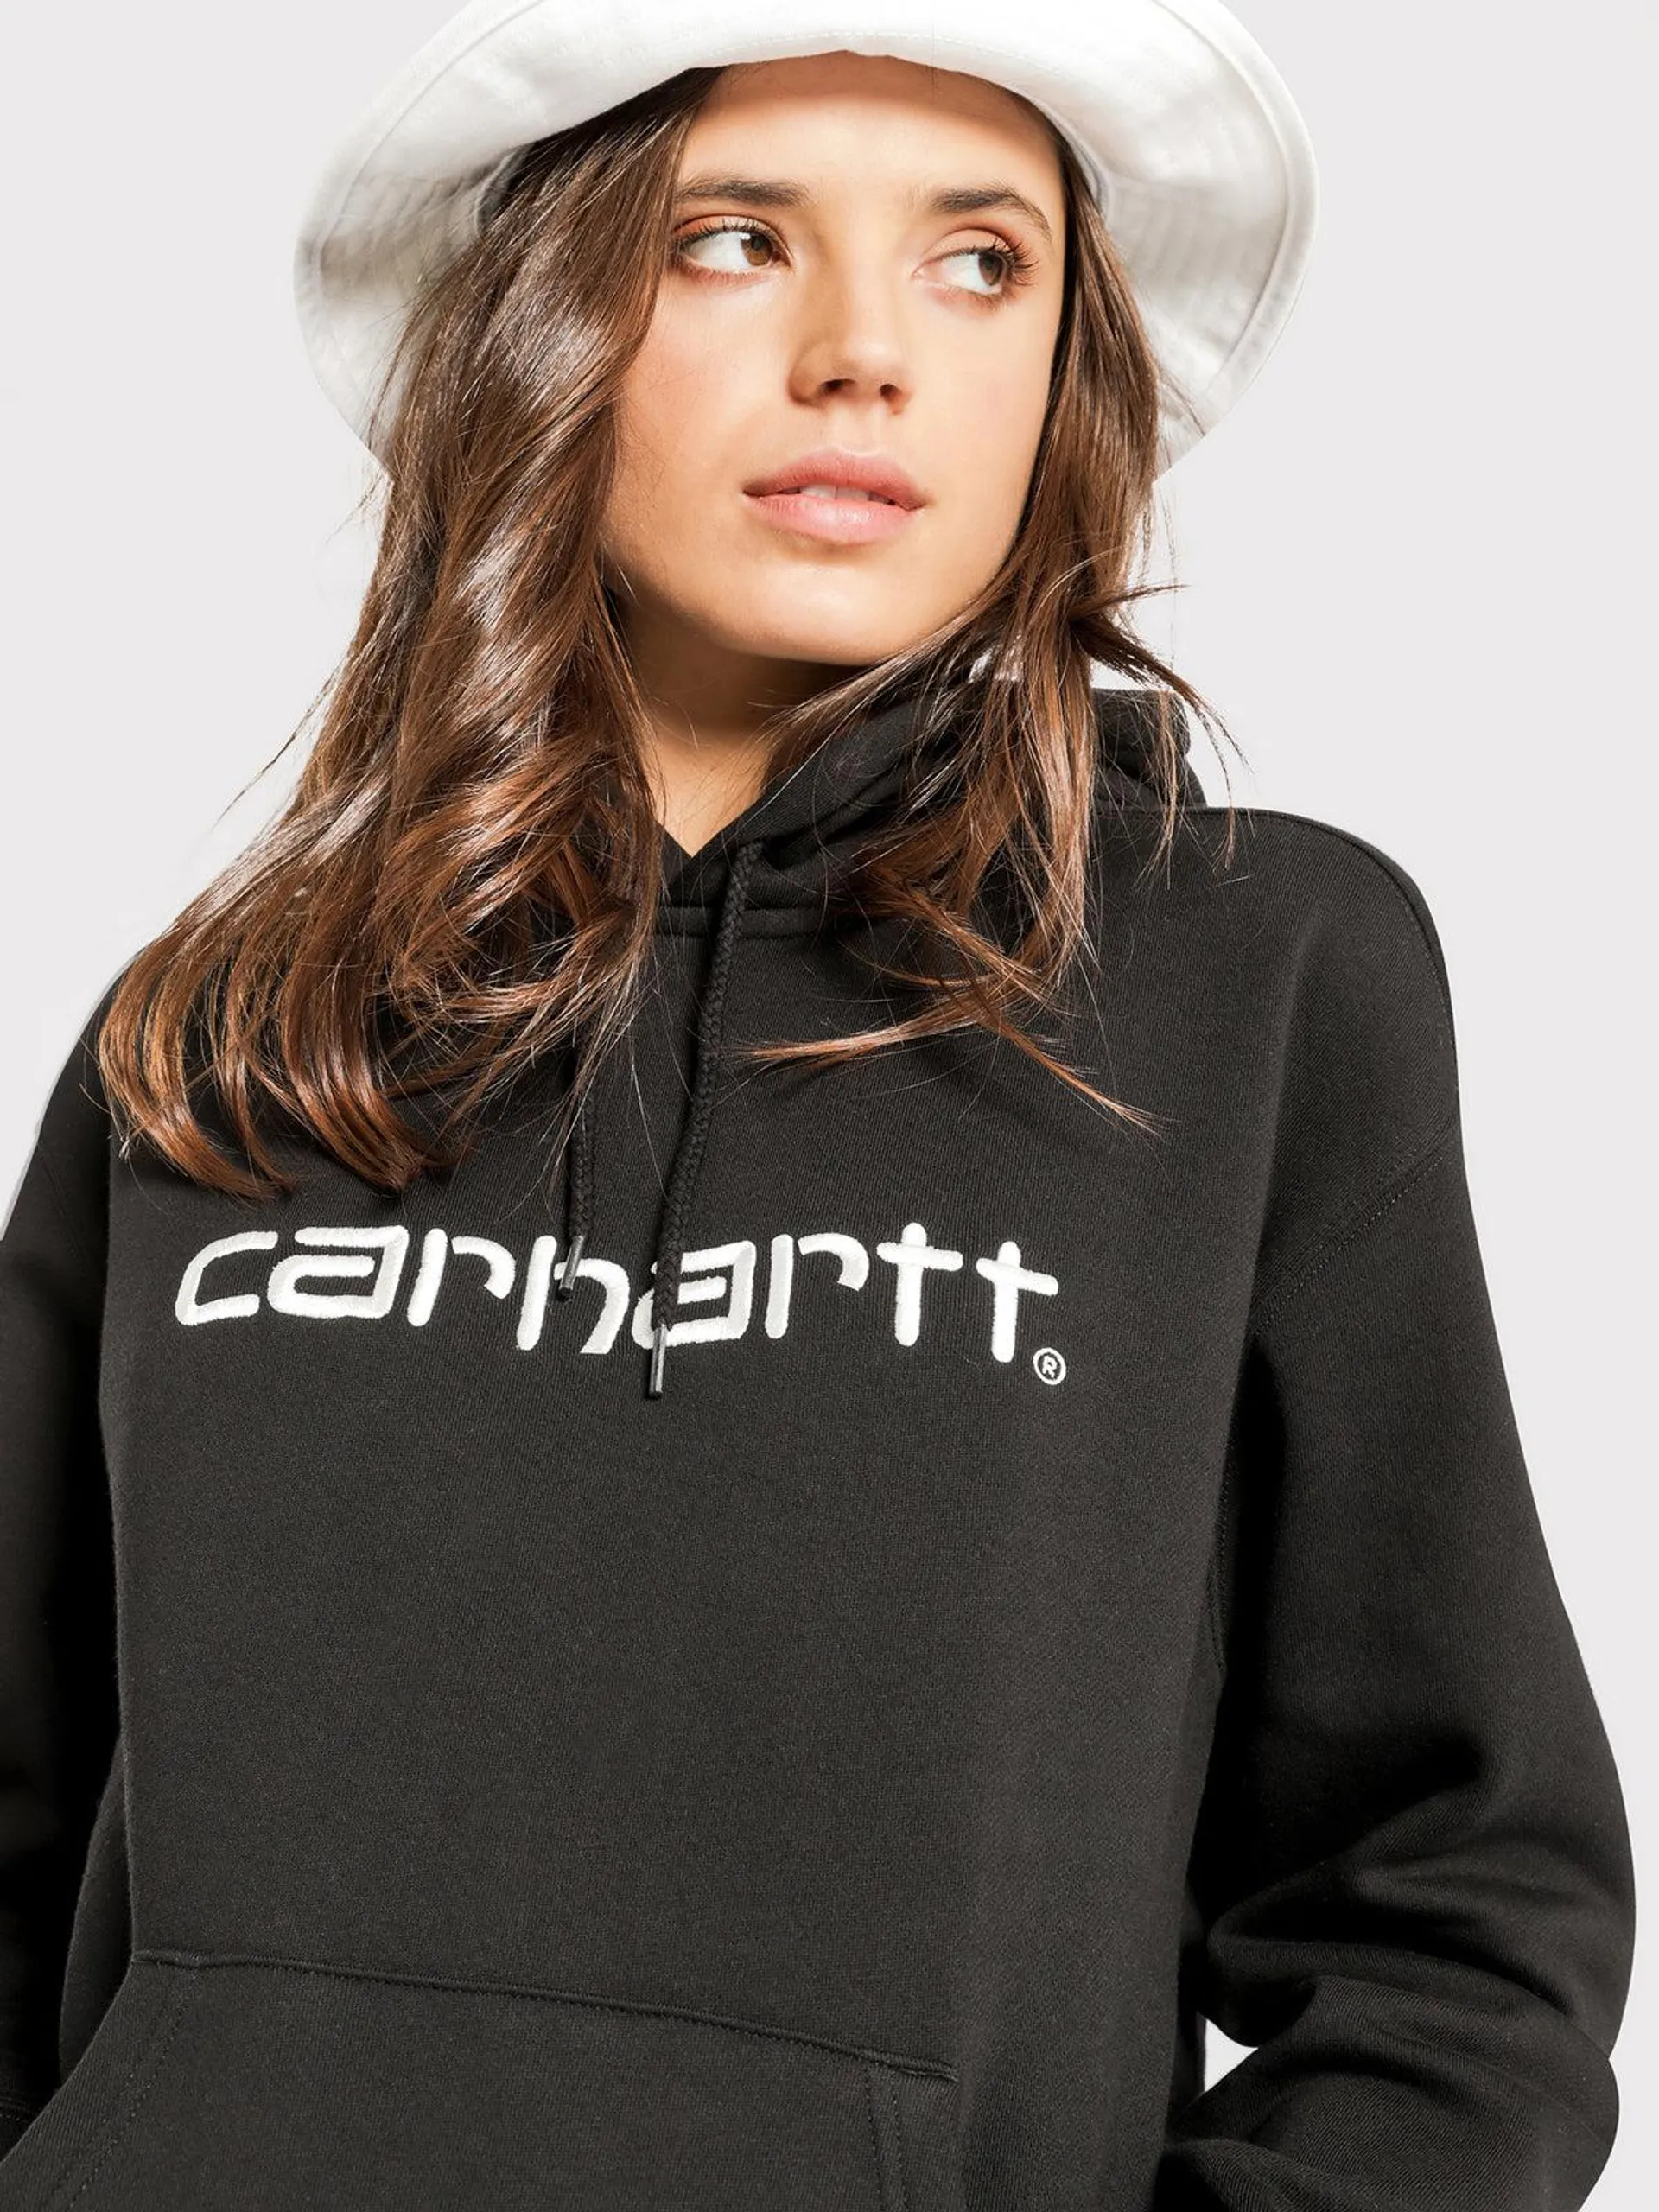 Hooded Carhartt Sweatshirt in Black & White